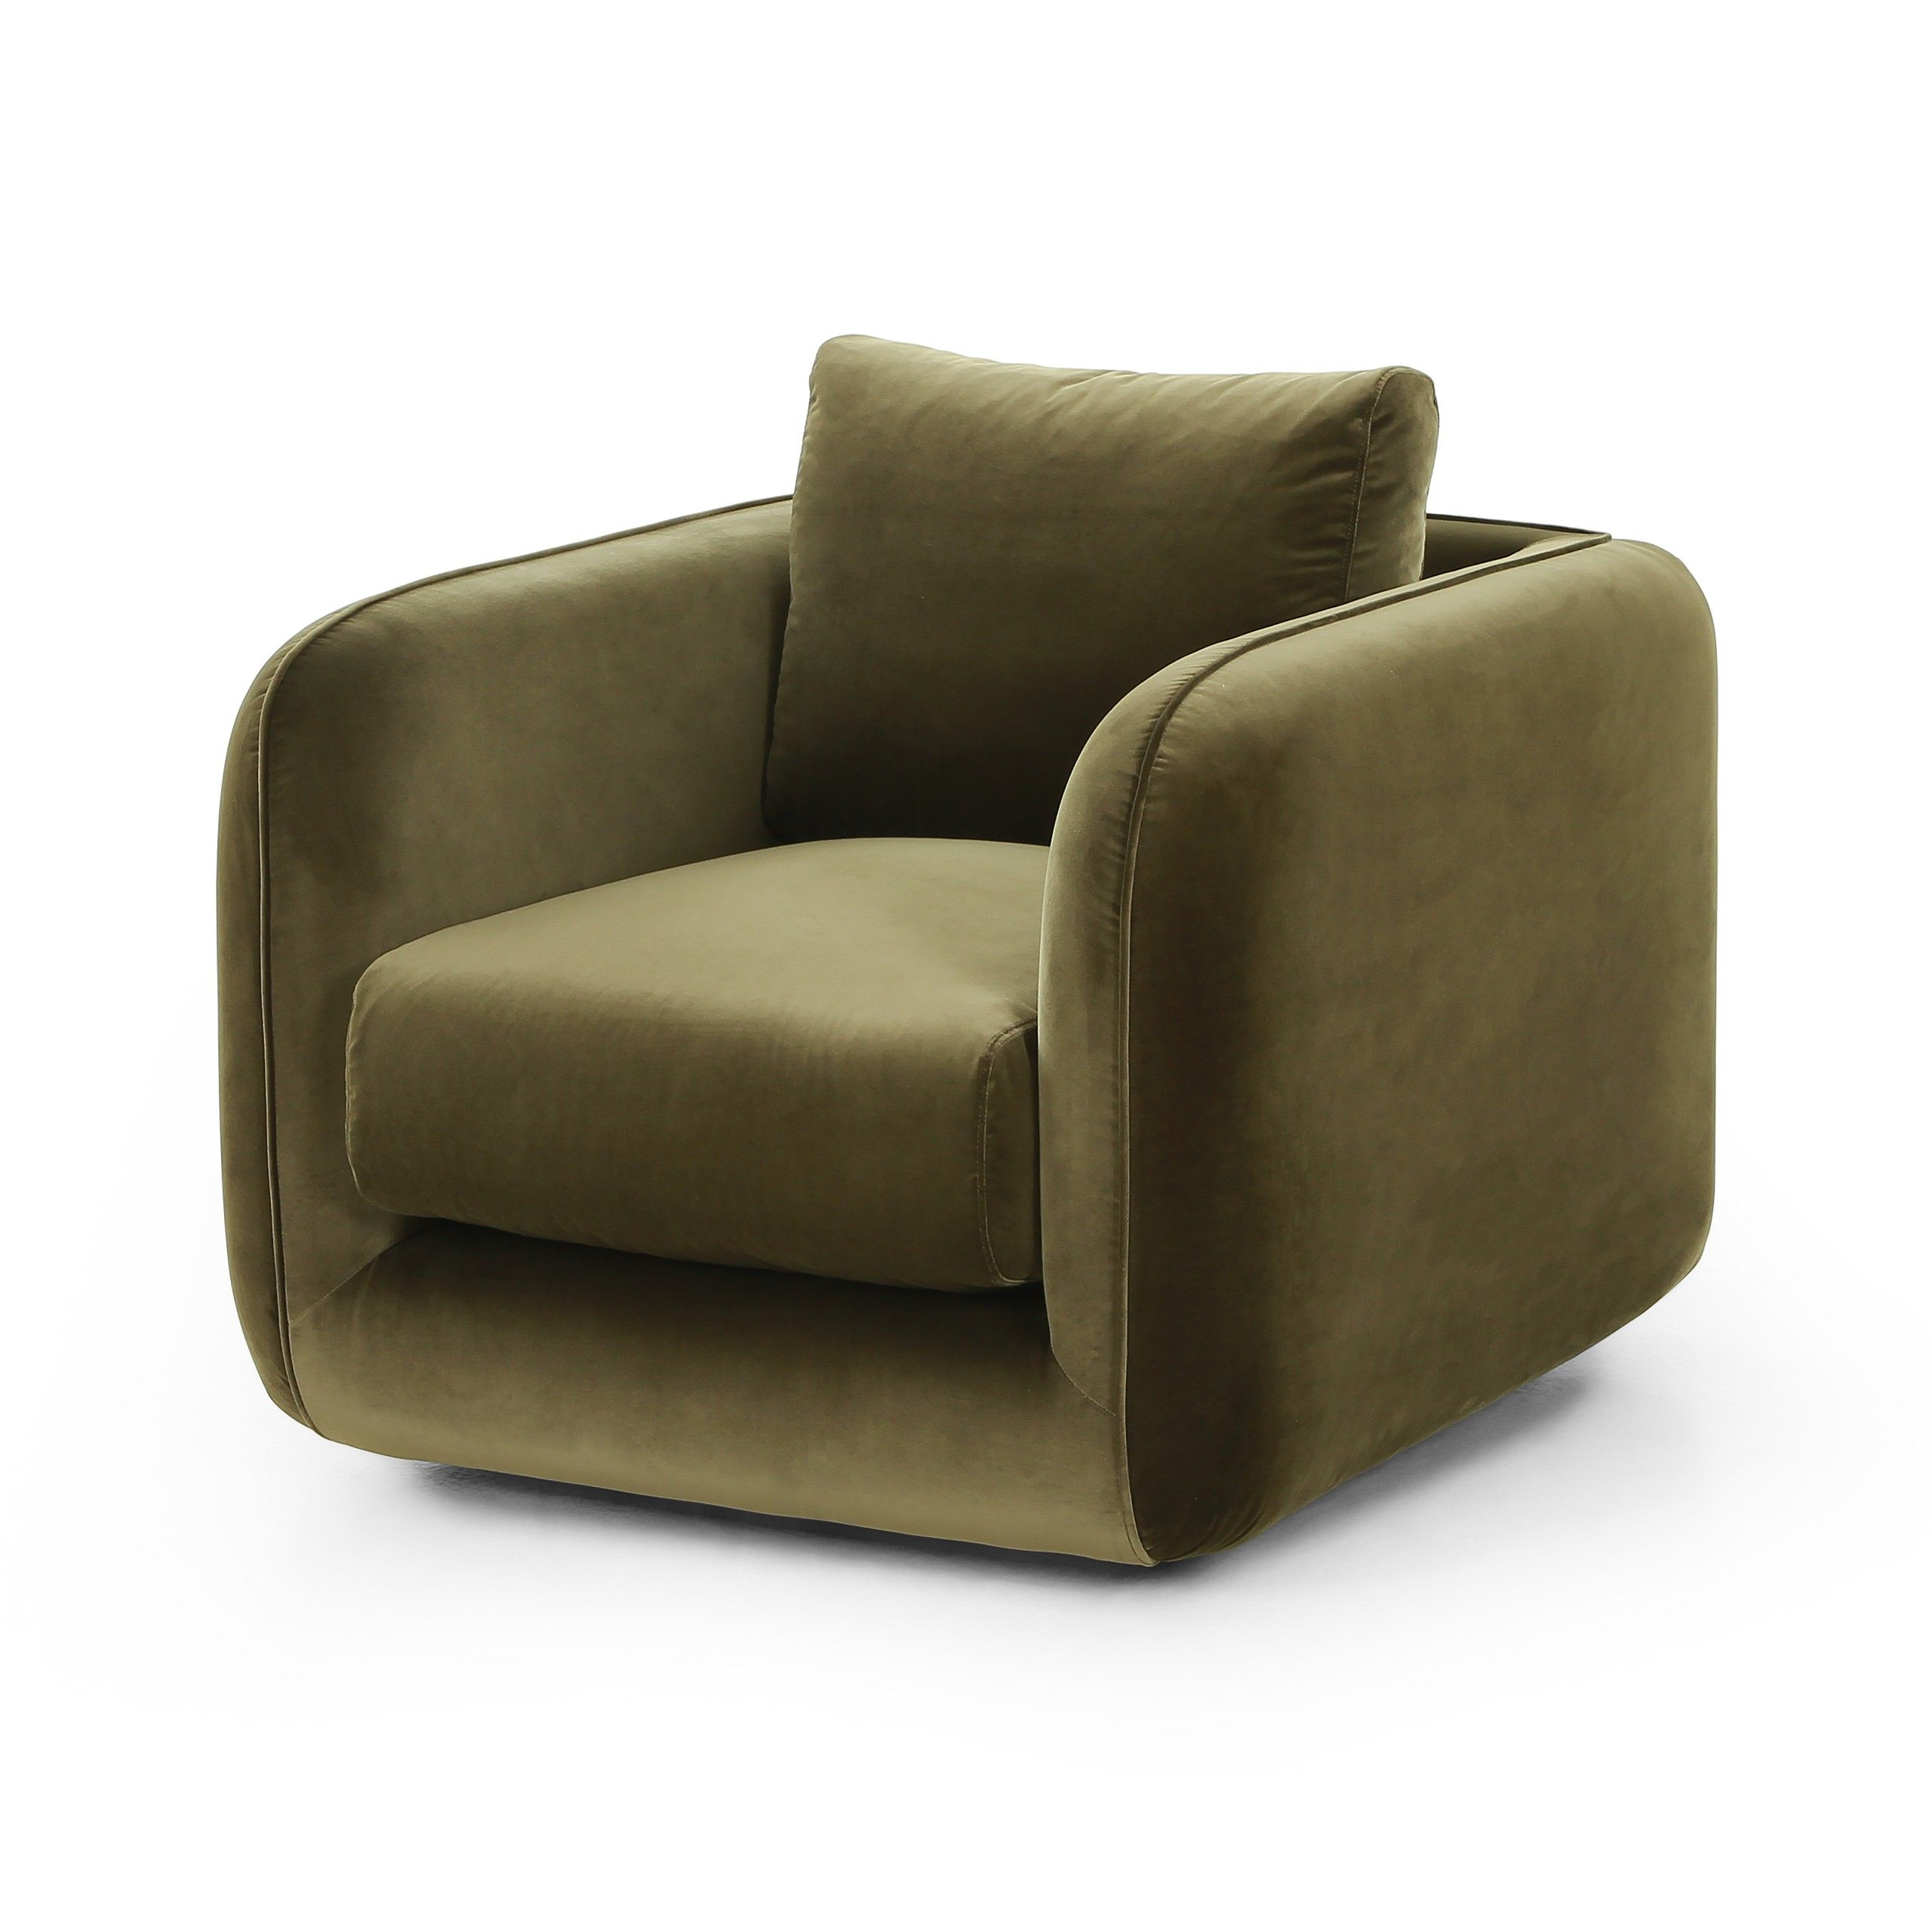 Malakai Chair - Surrey Olive